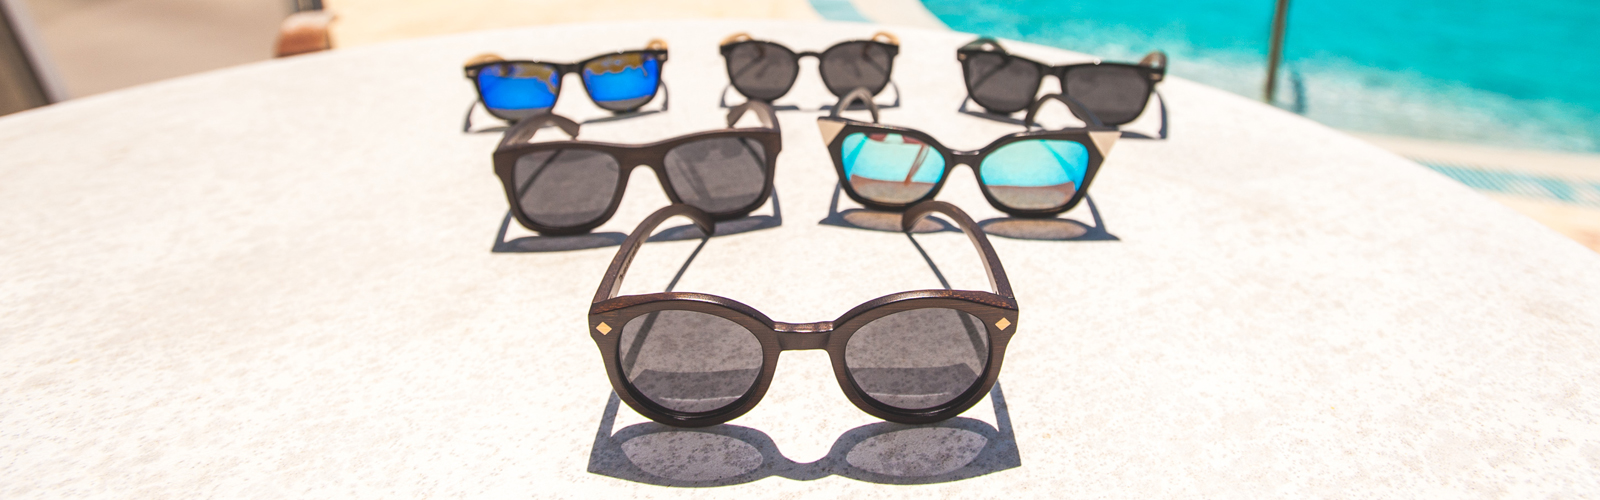 2020 sunglasses trends